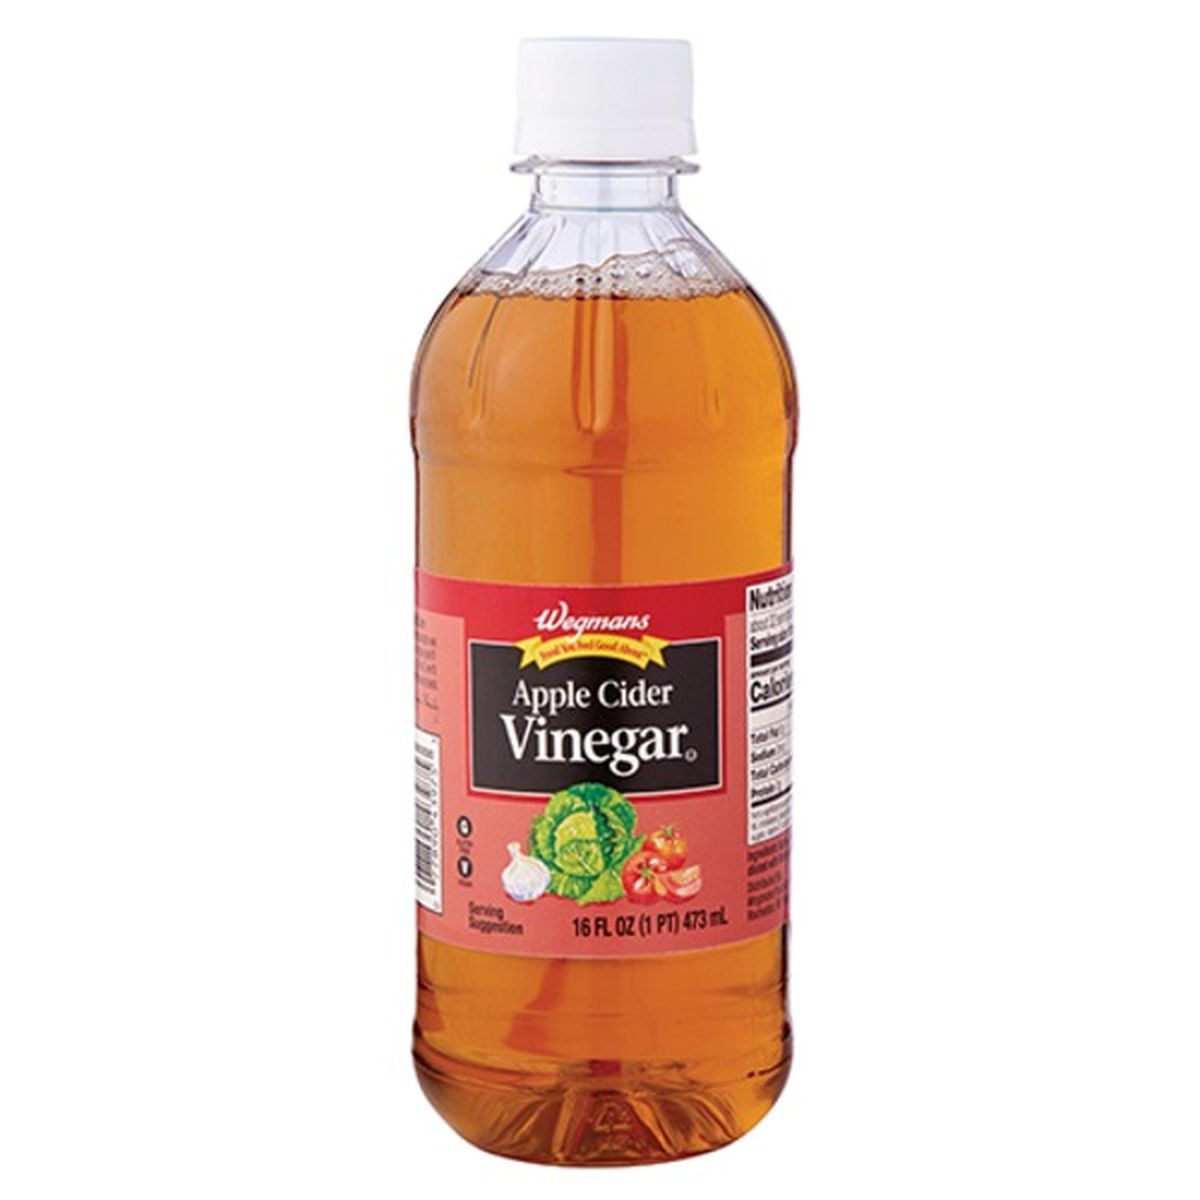 Calories in Wegmans Apple Cider Vinegar